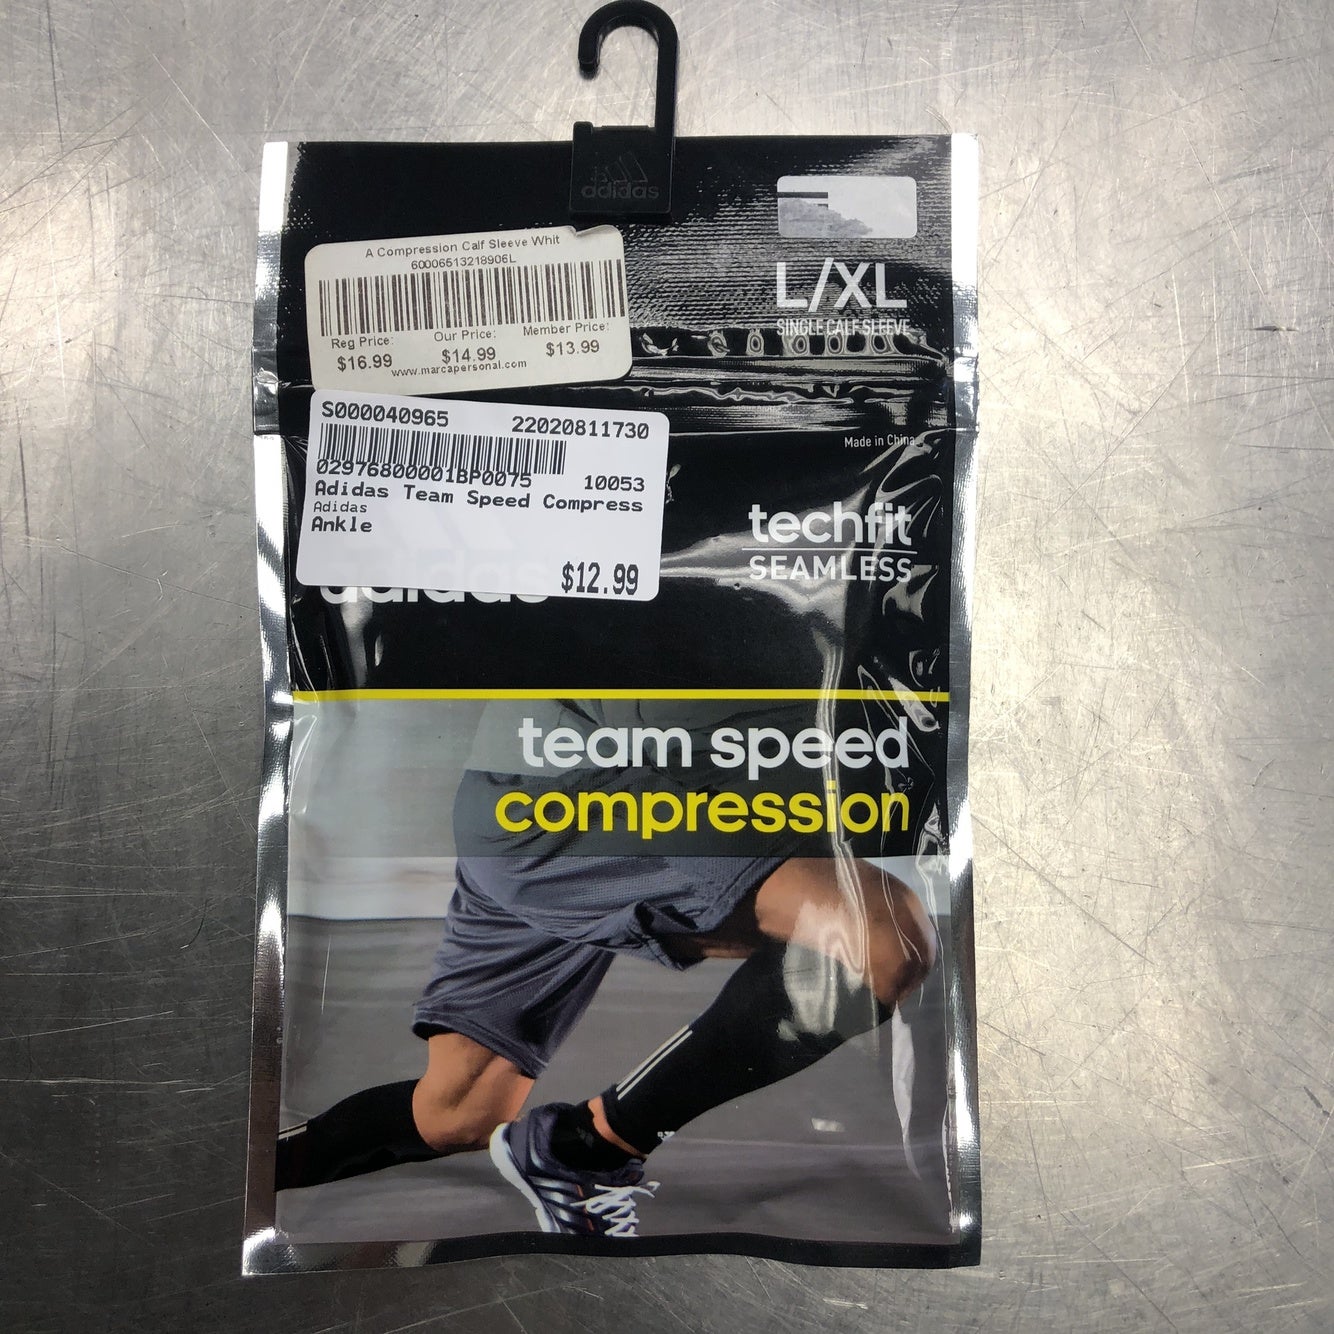 Adidas Team Speed Compression Single Calf Sleeve L/XL Techfit